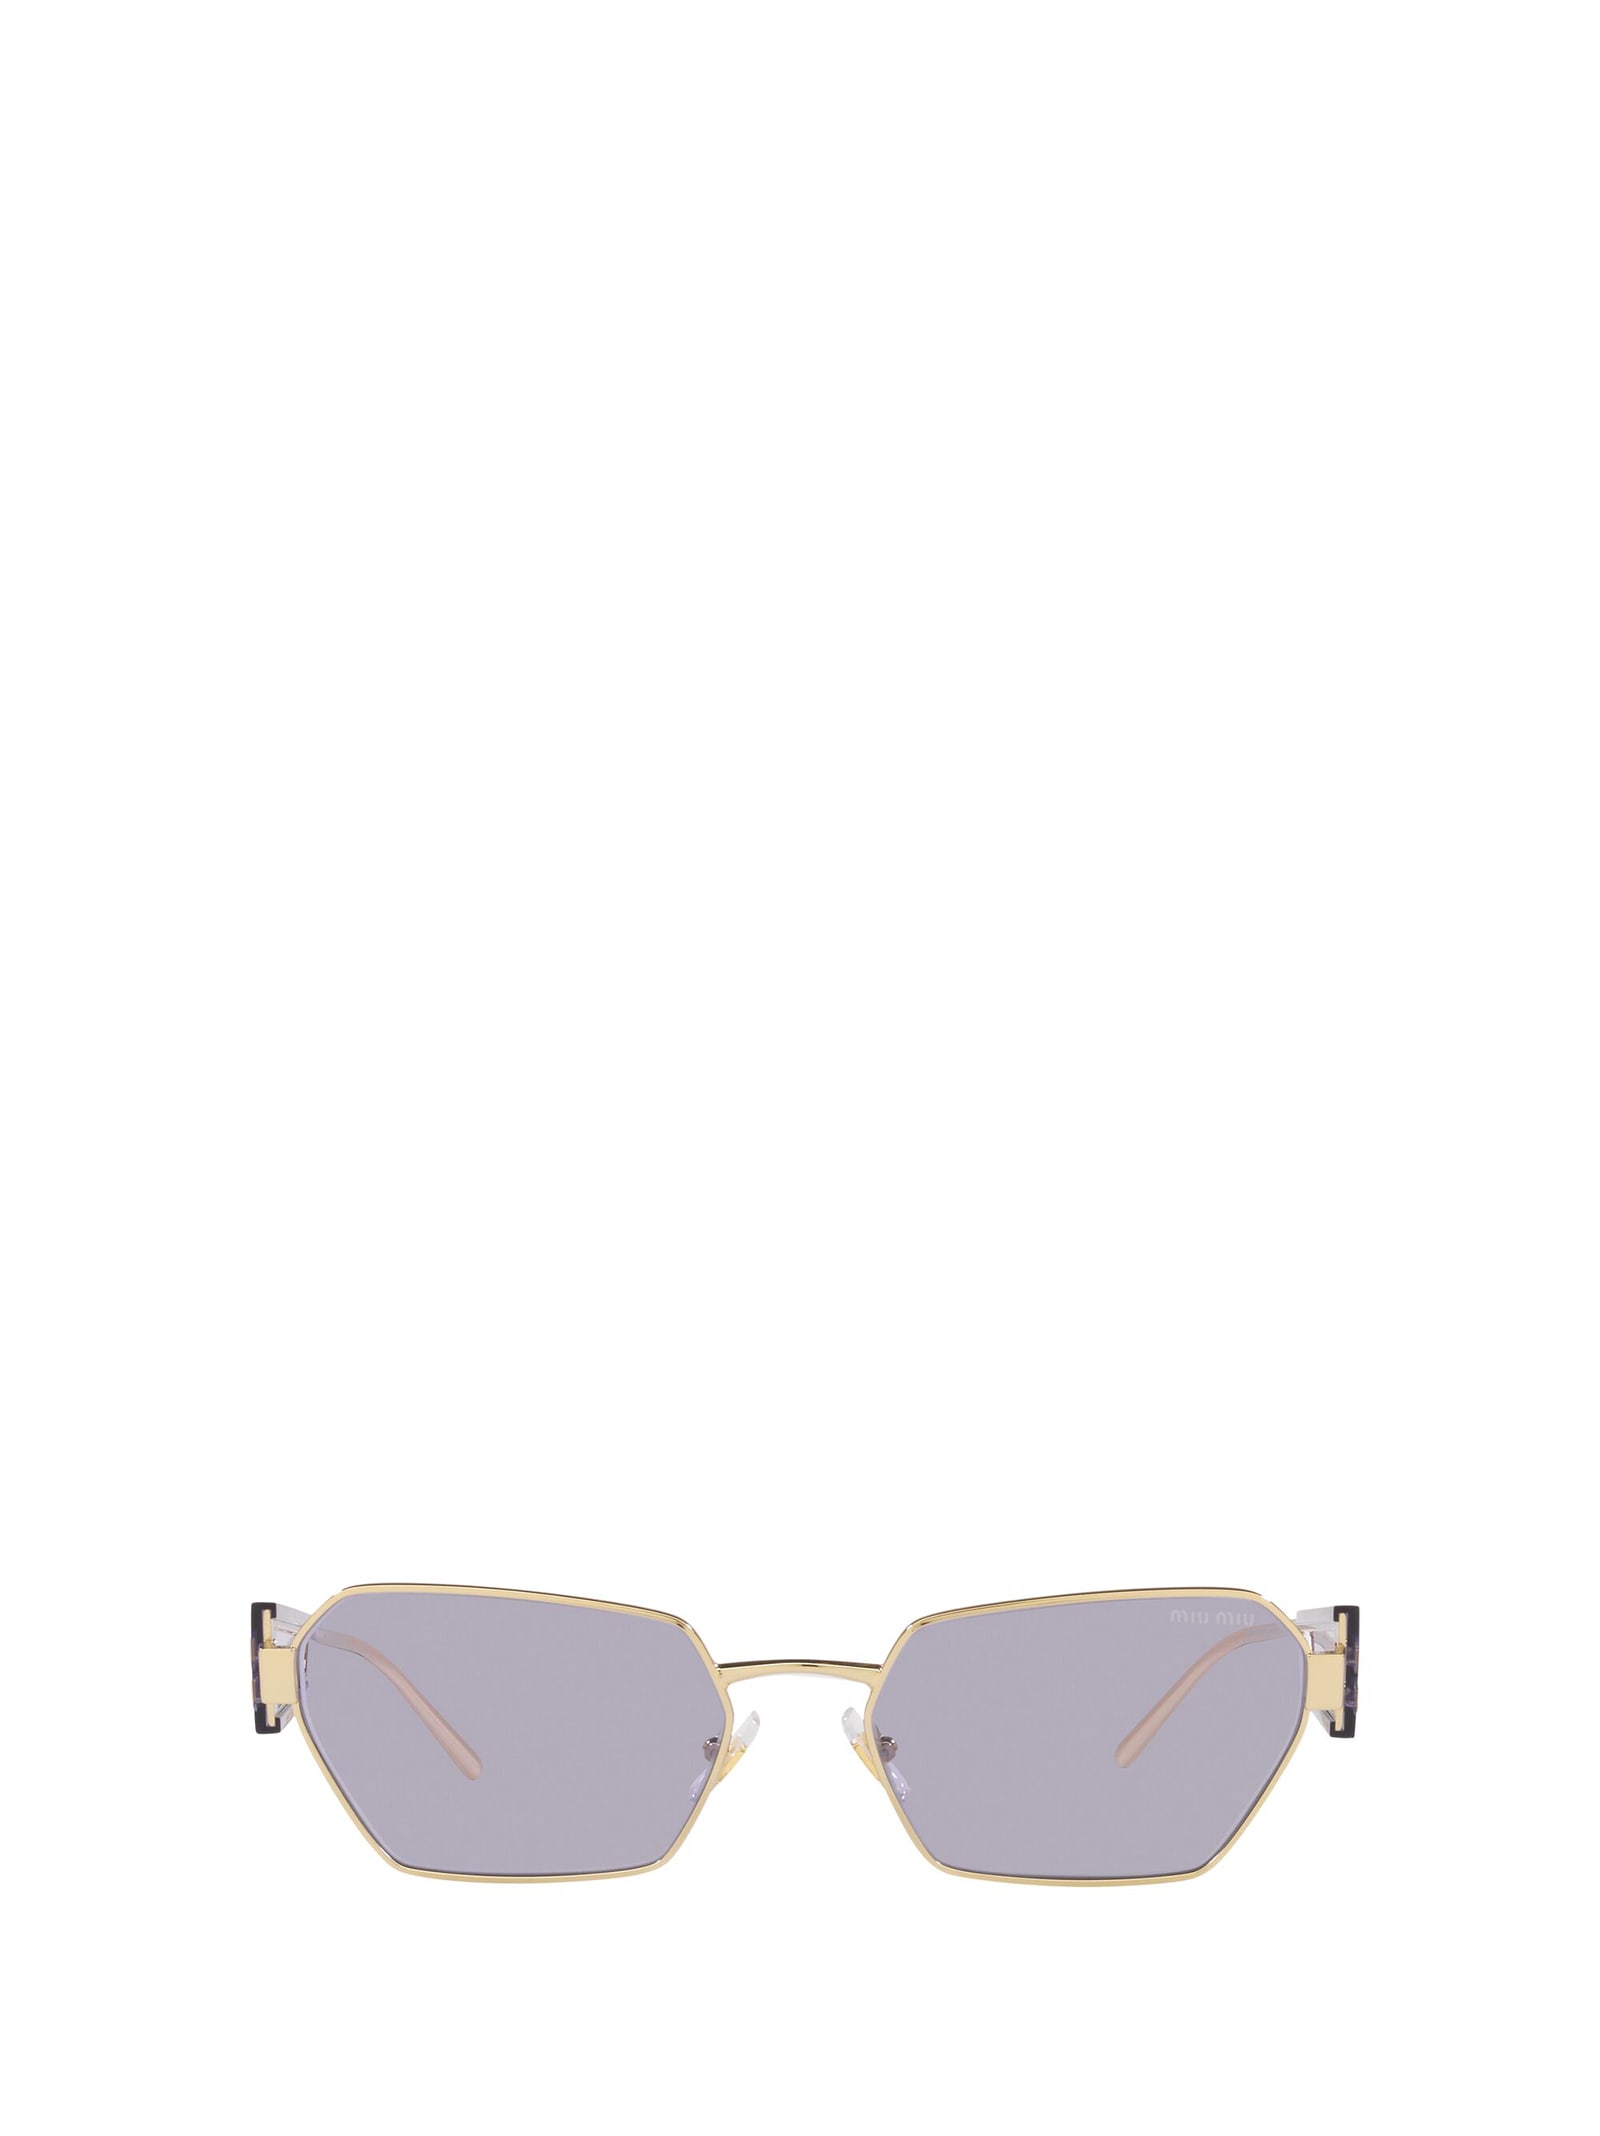 Miu Miu Eyewear Mu 53ws Pale Gold Sunglasses